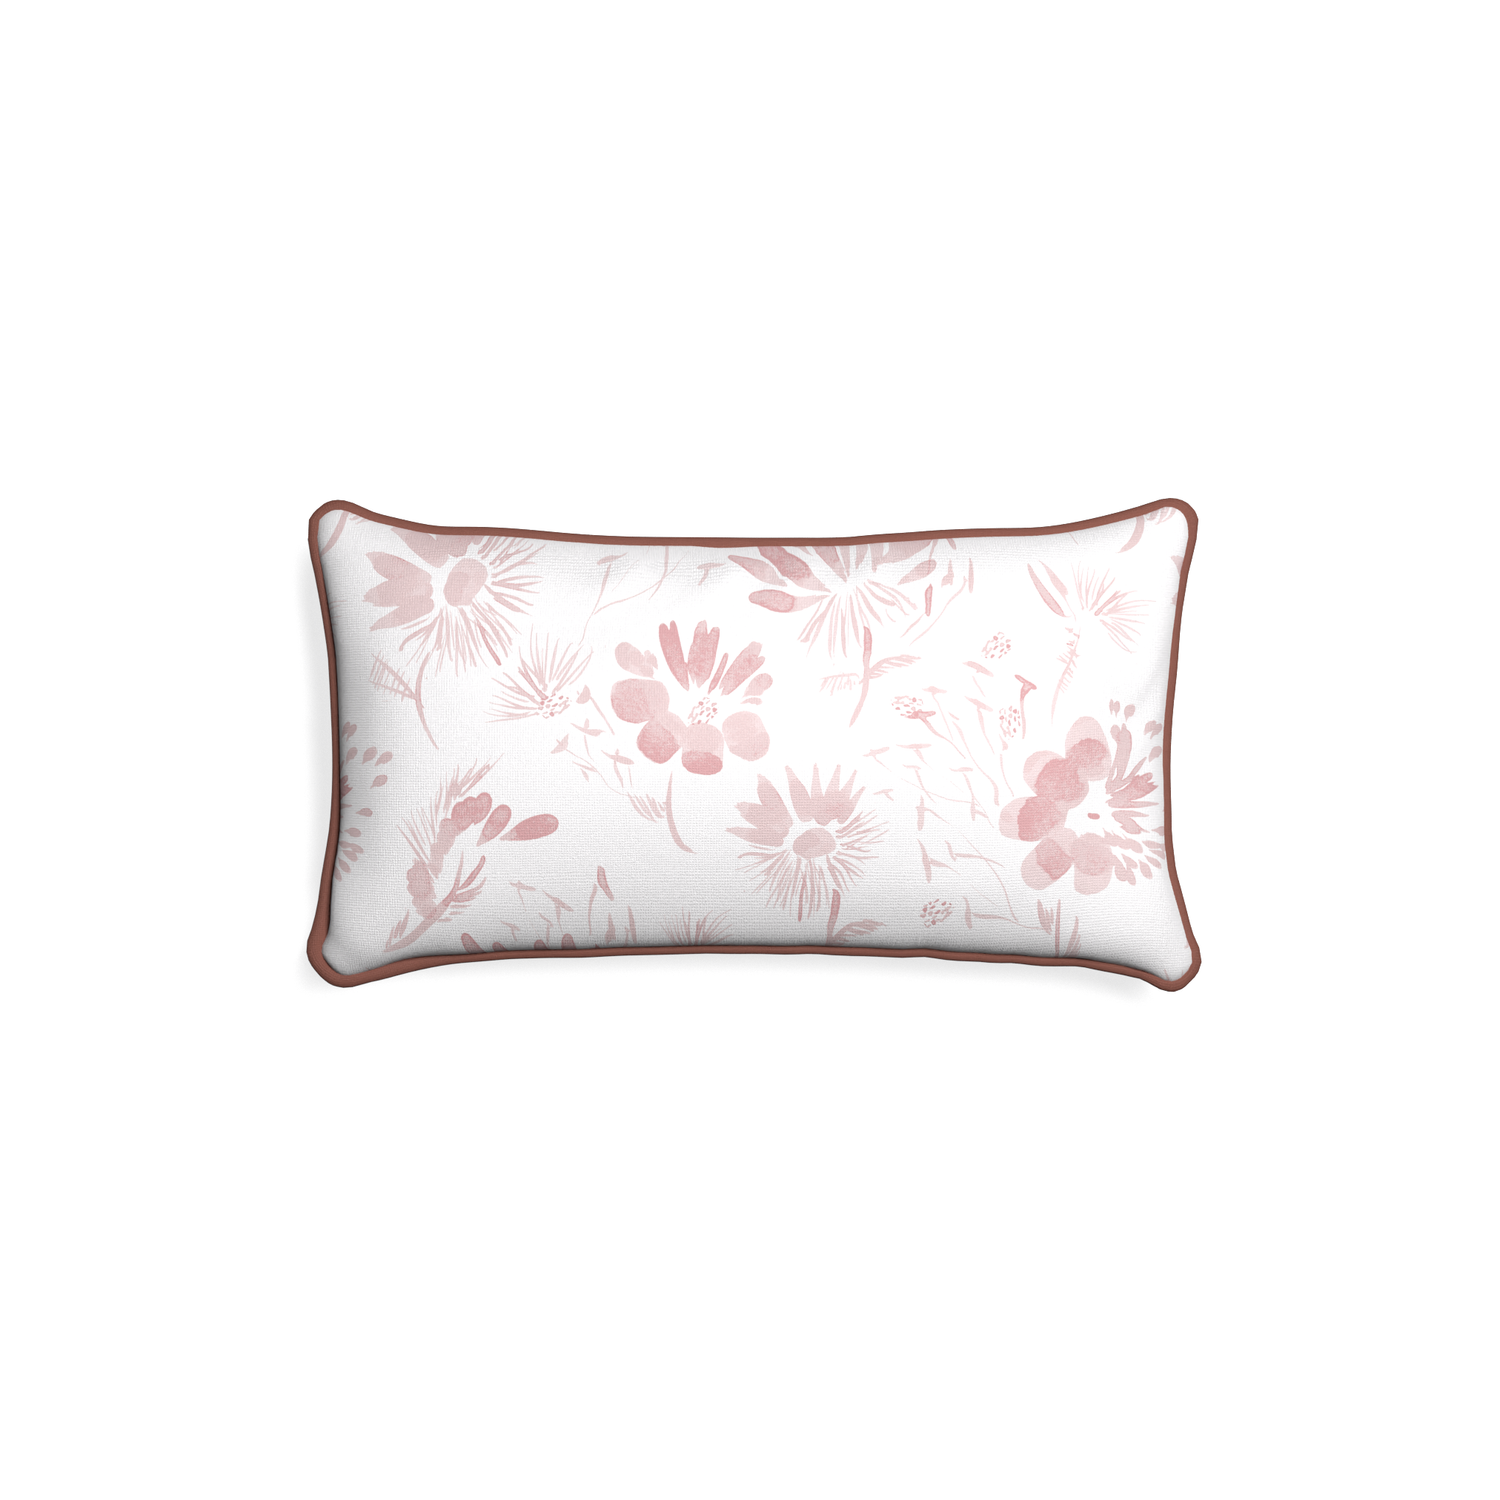 Petite-lumbar blake custom pink floralpillow with w piping on white background